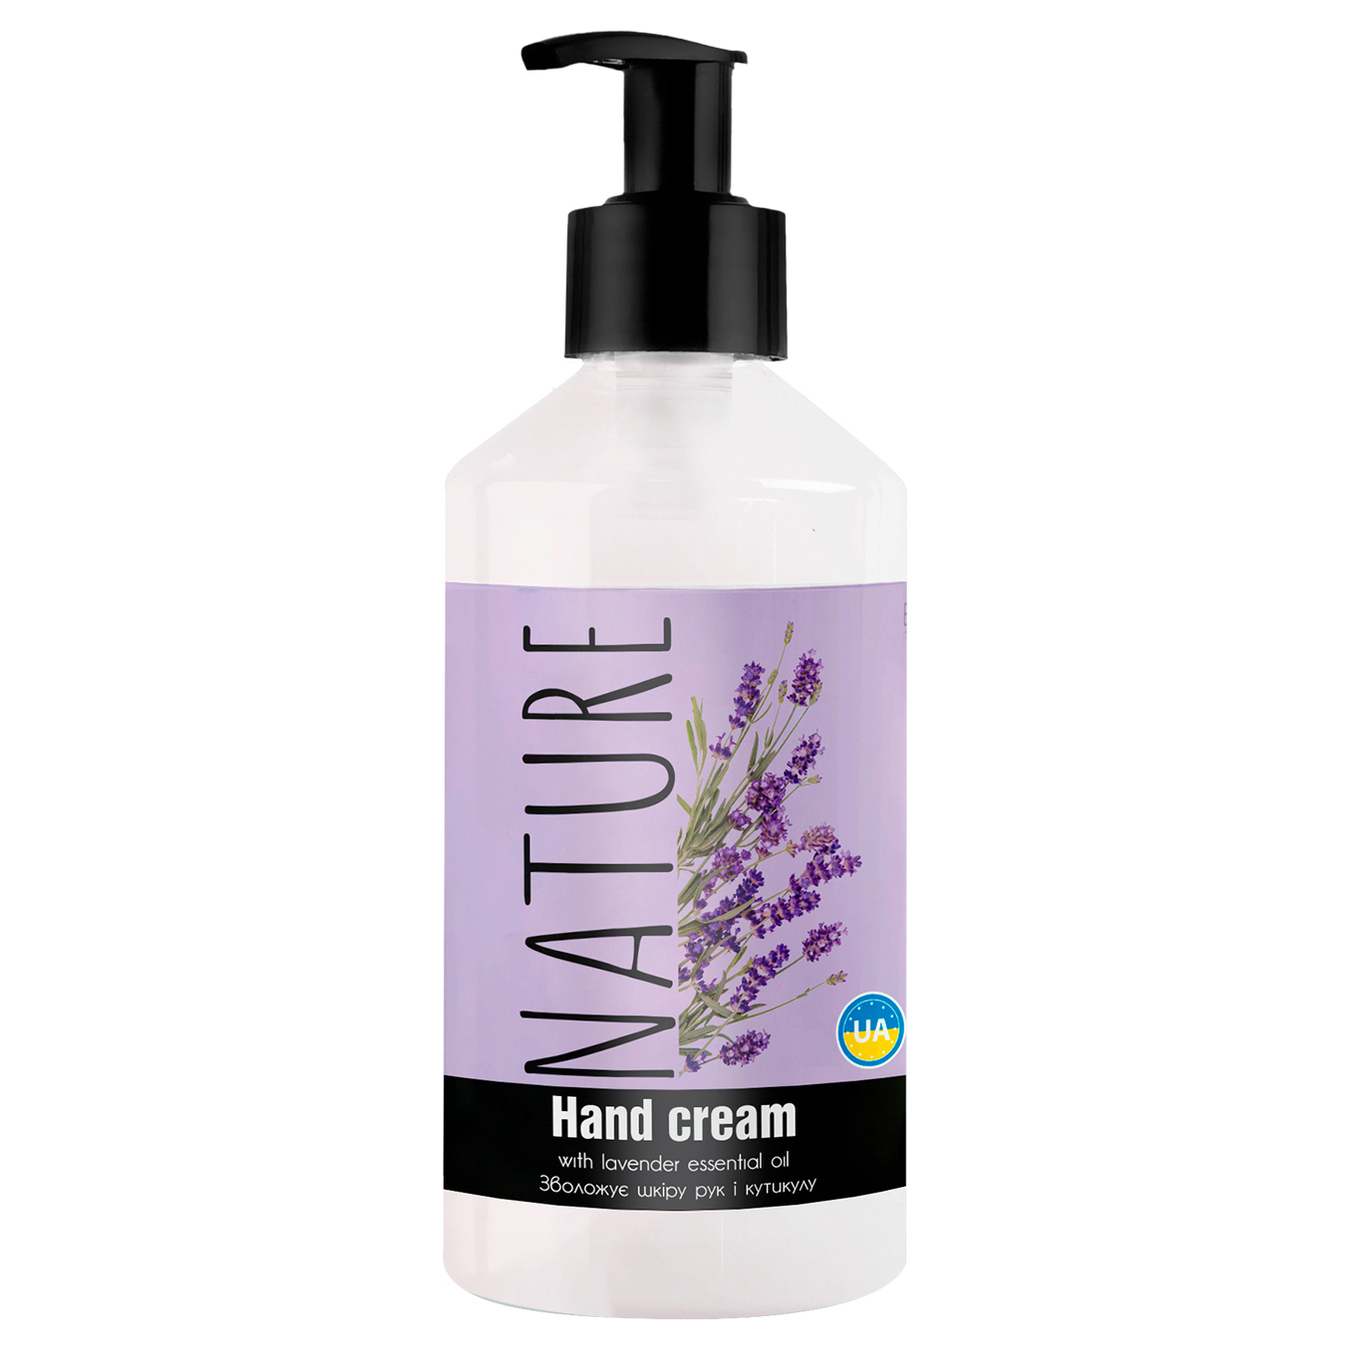 Nature hand cream with lavender essential oil 300 ml